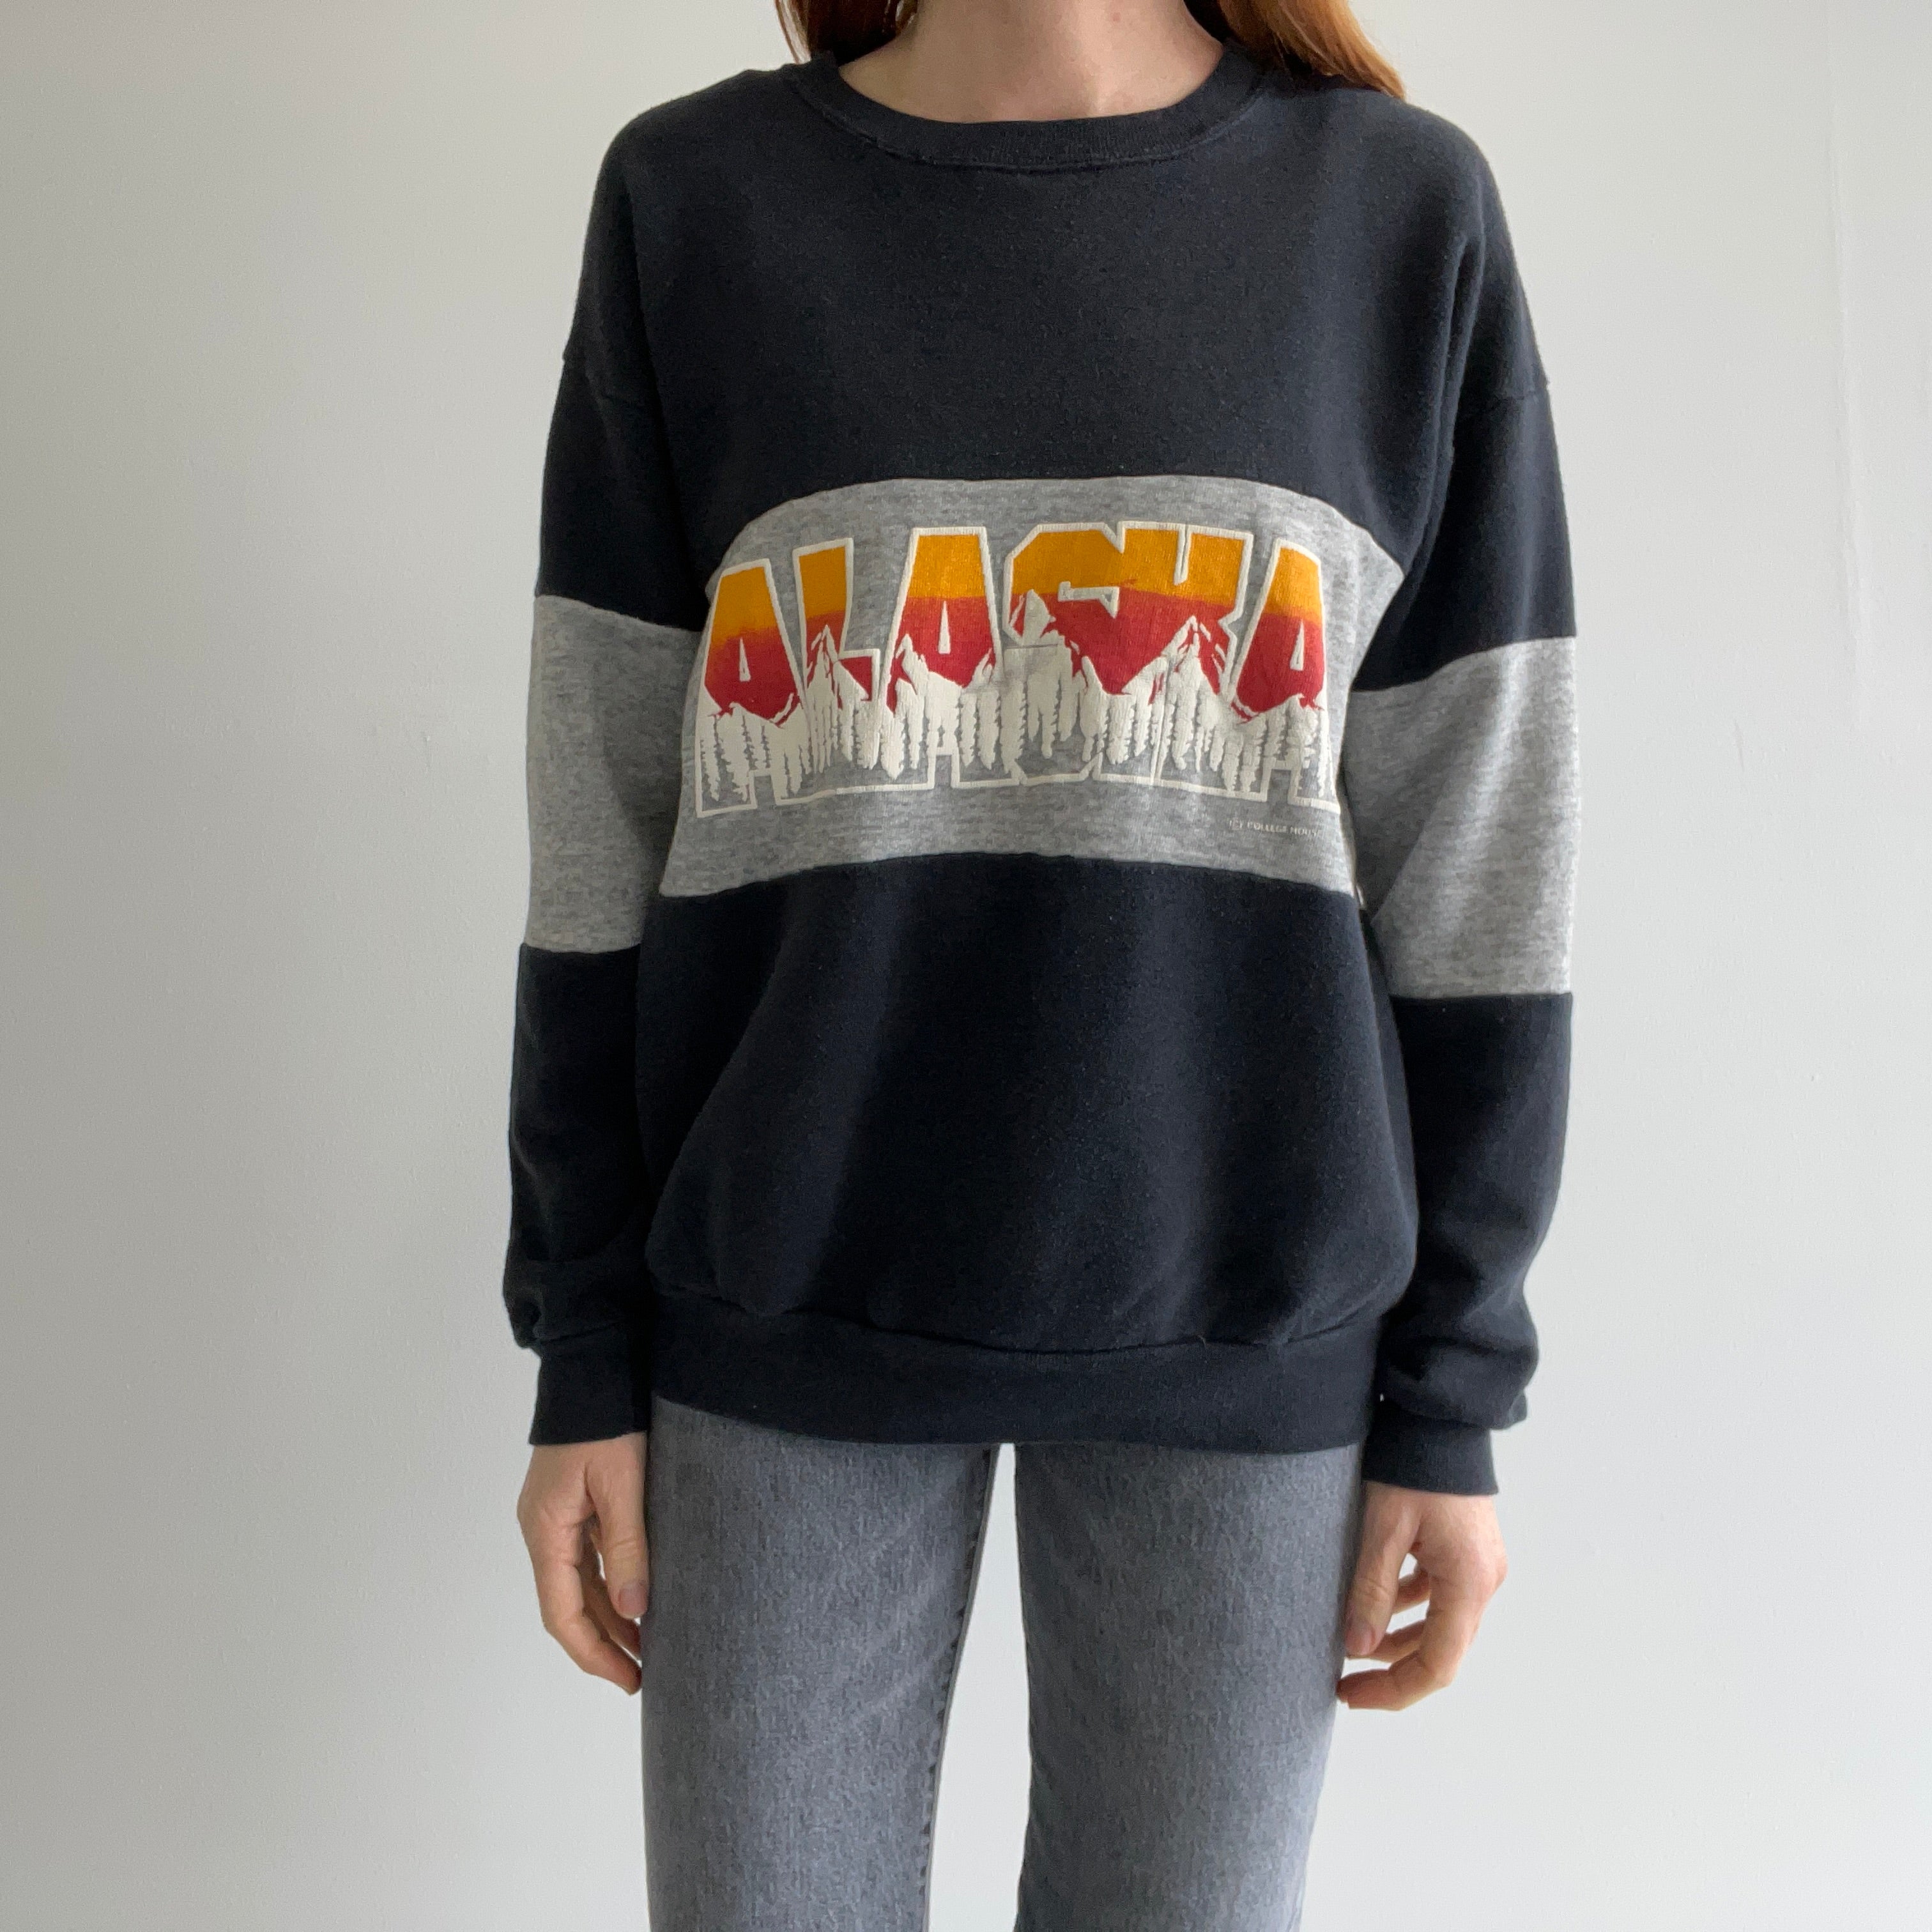 1980s Alaska Color Block Sweatshirt - Yes Please